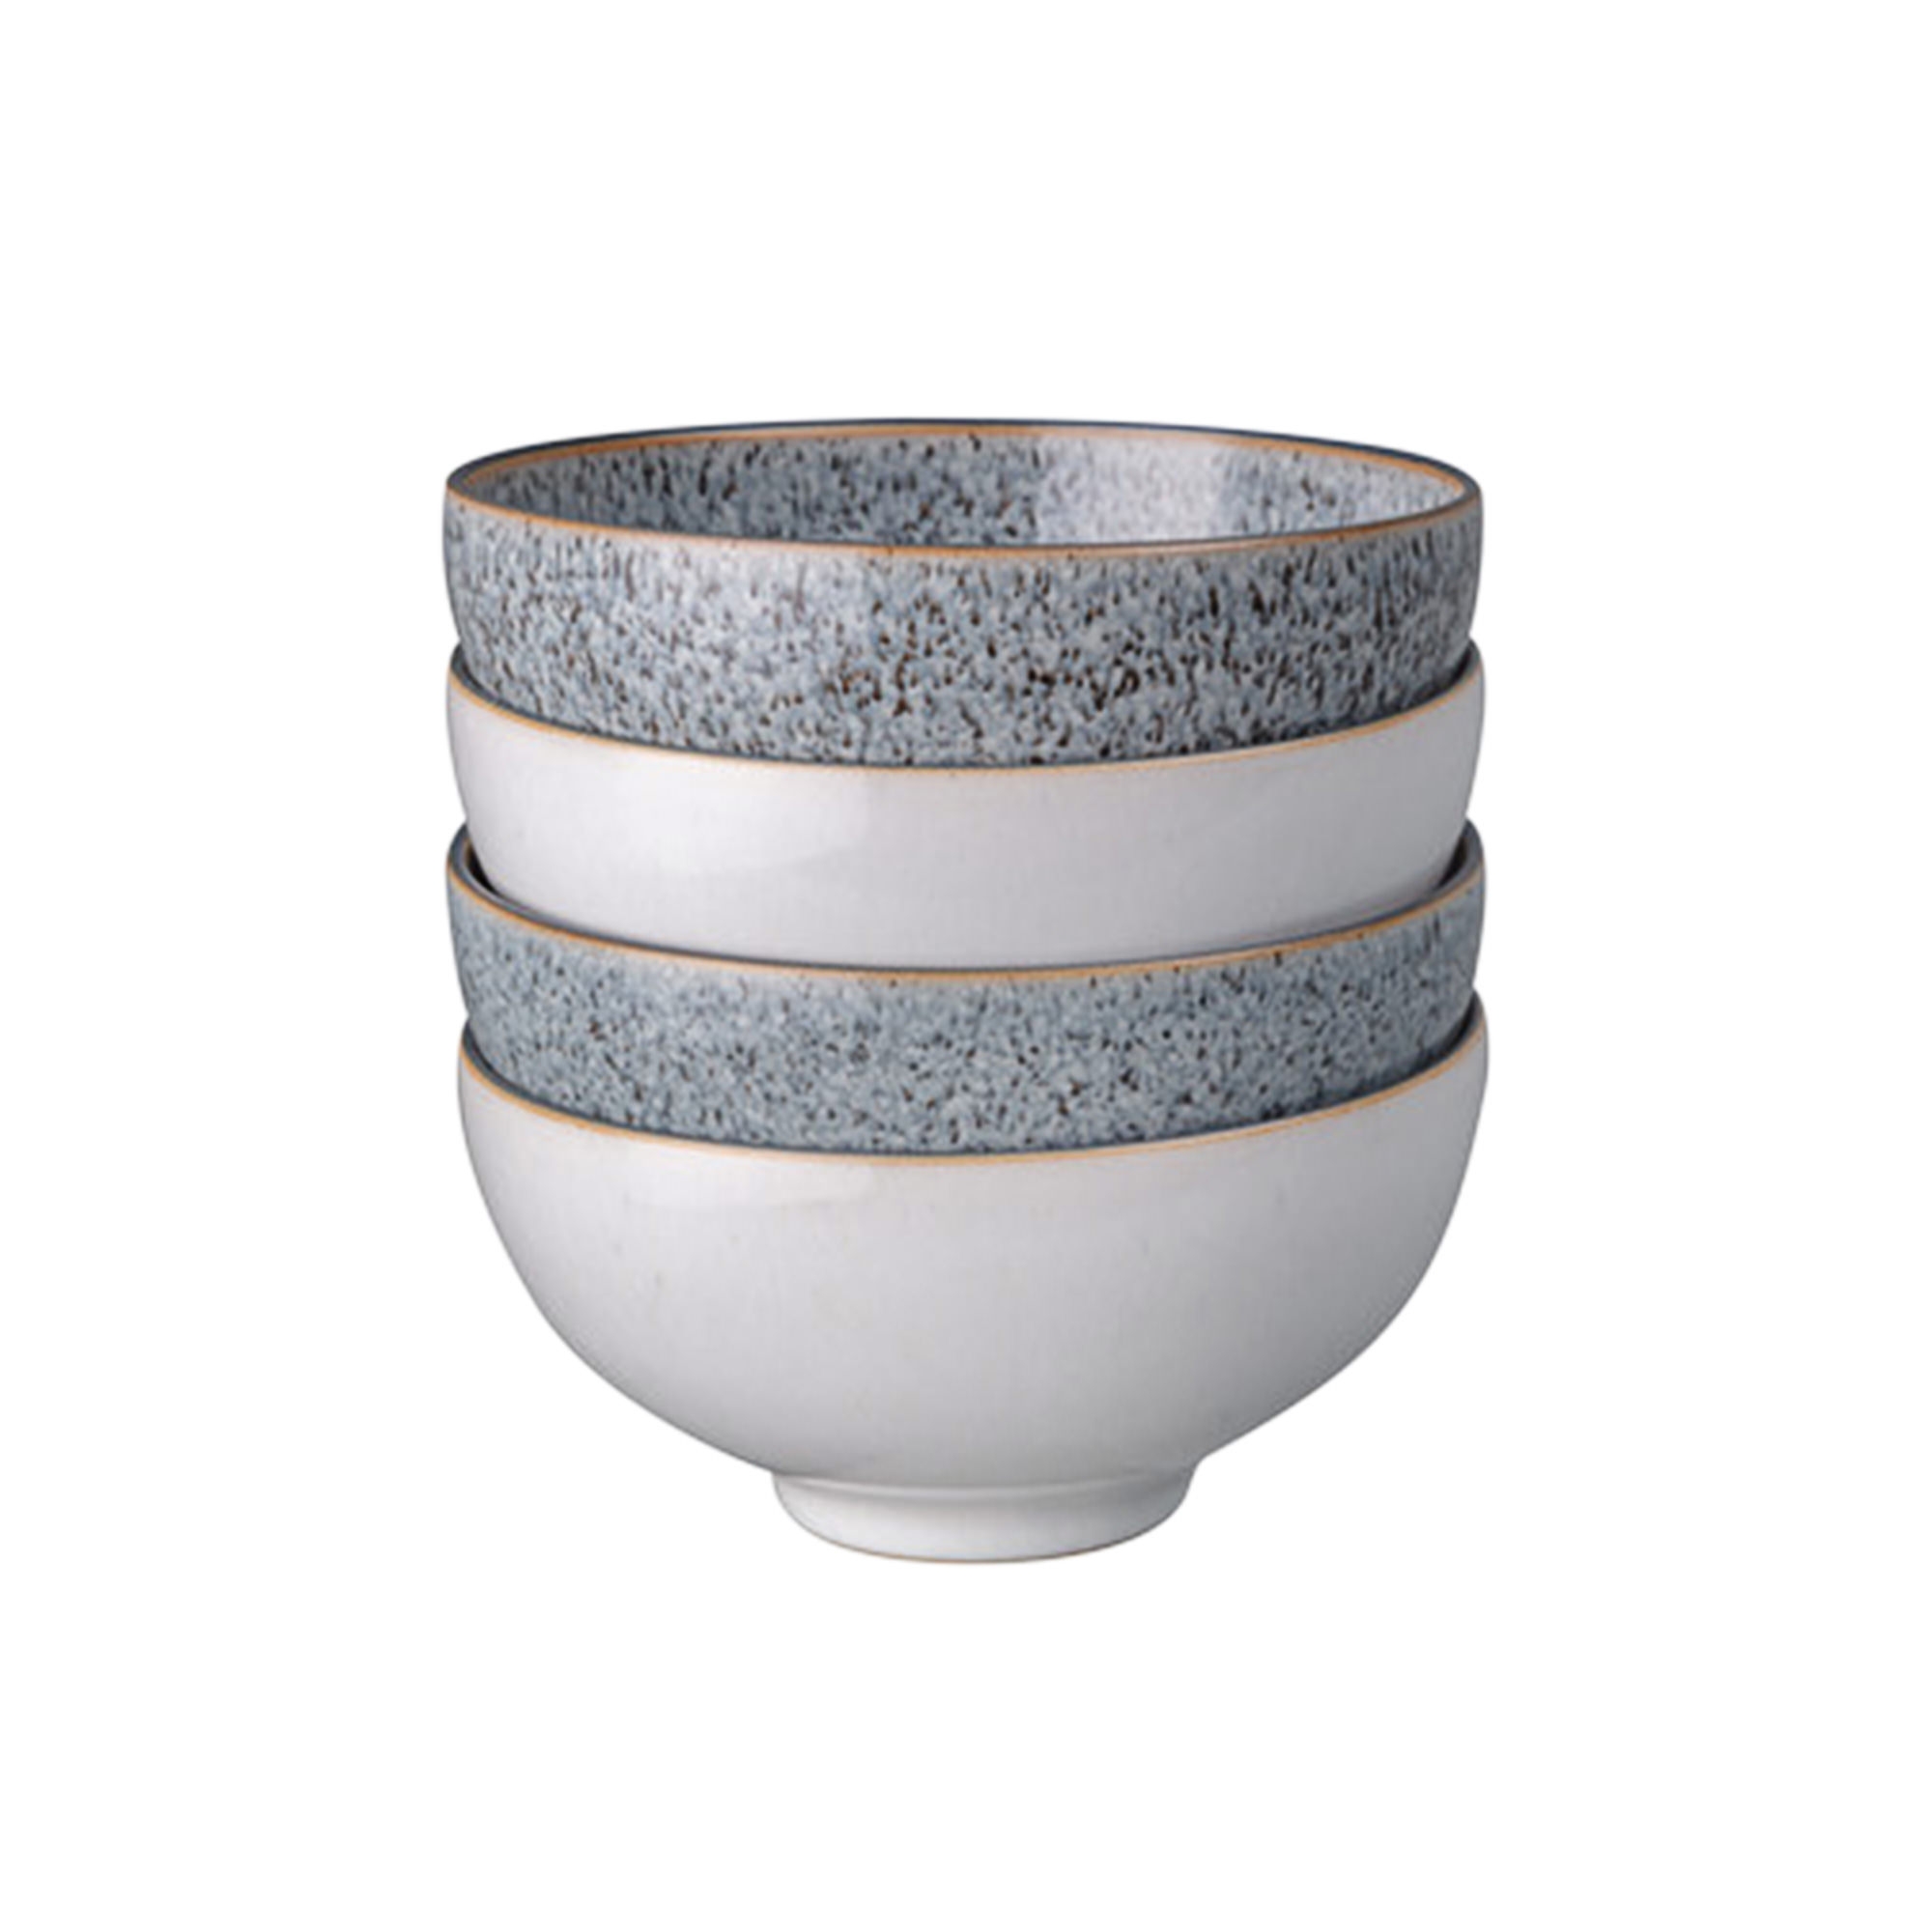 Denby Studio Grey Rice Bowl Set of 4 Image 1